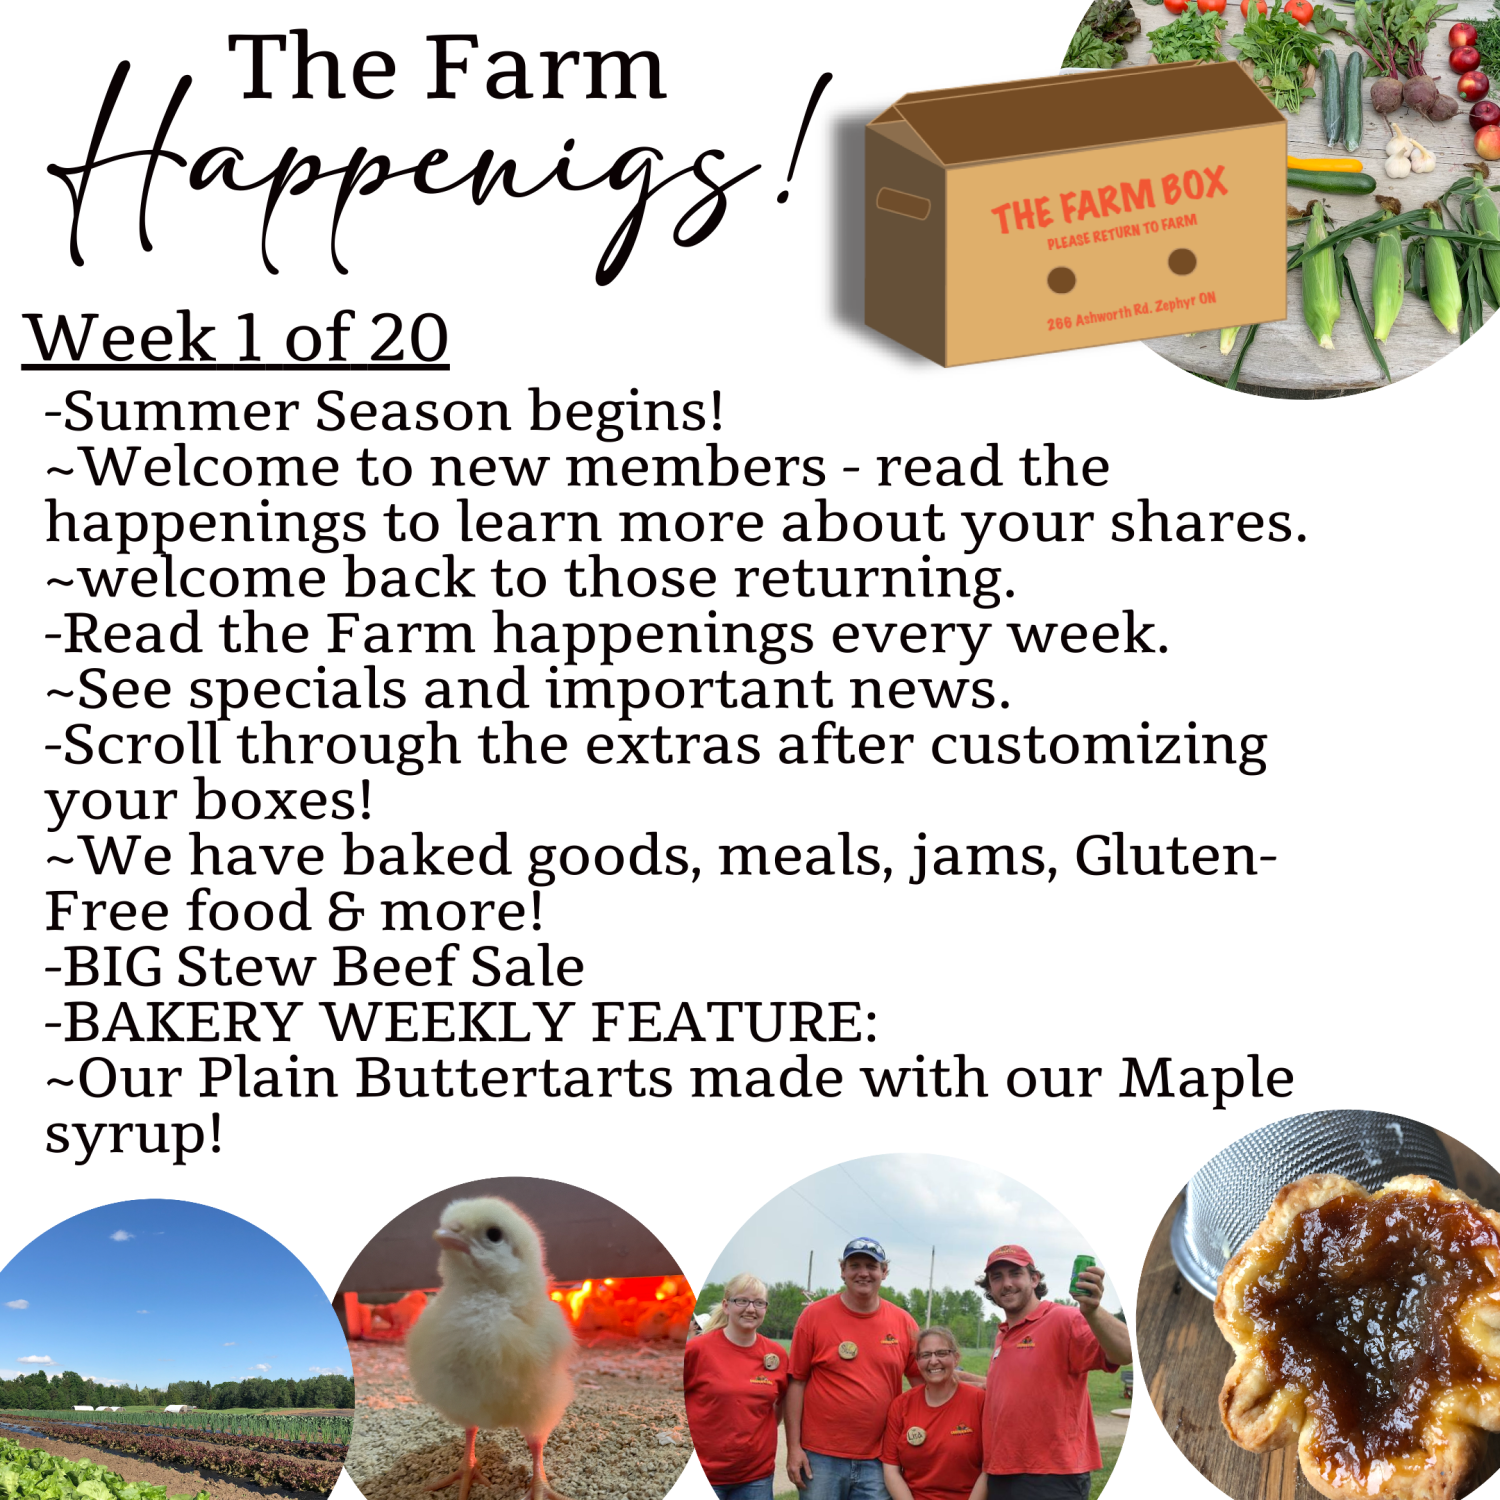 Previous Happening: "The Farm Box"-Coopers CSA Farm Farm Happenings: Week 1 of 20